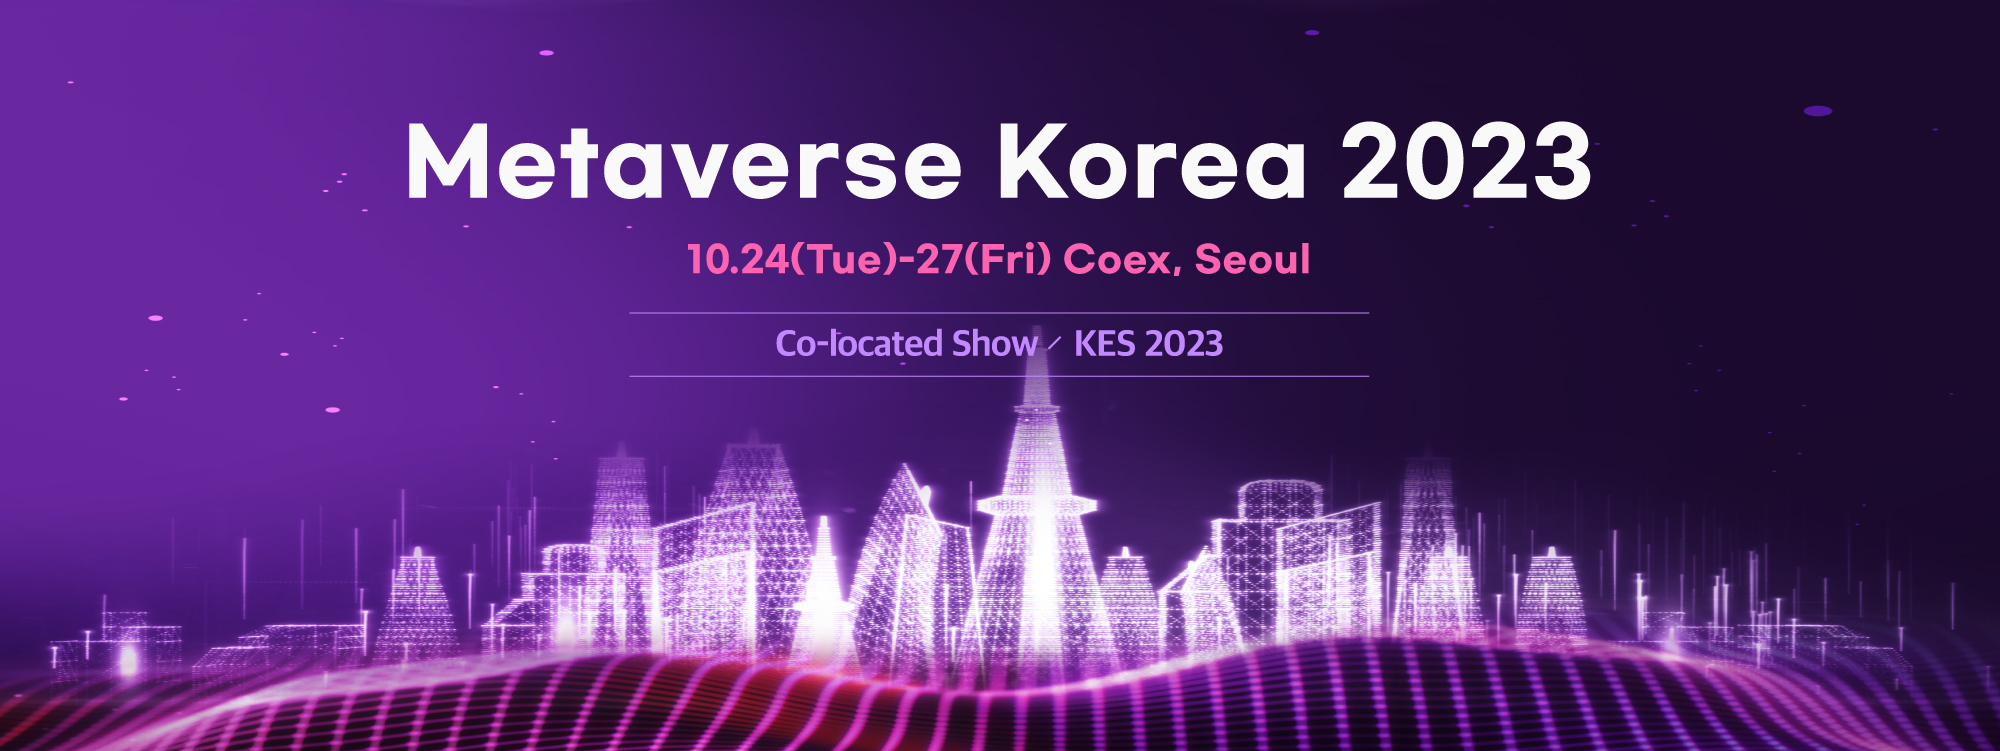 METAVERSE Korea 2023